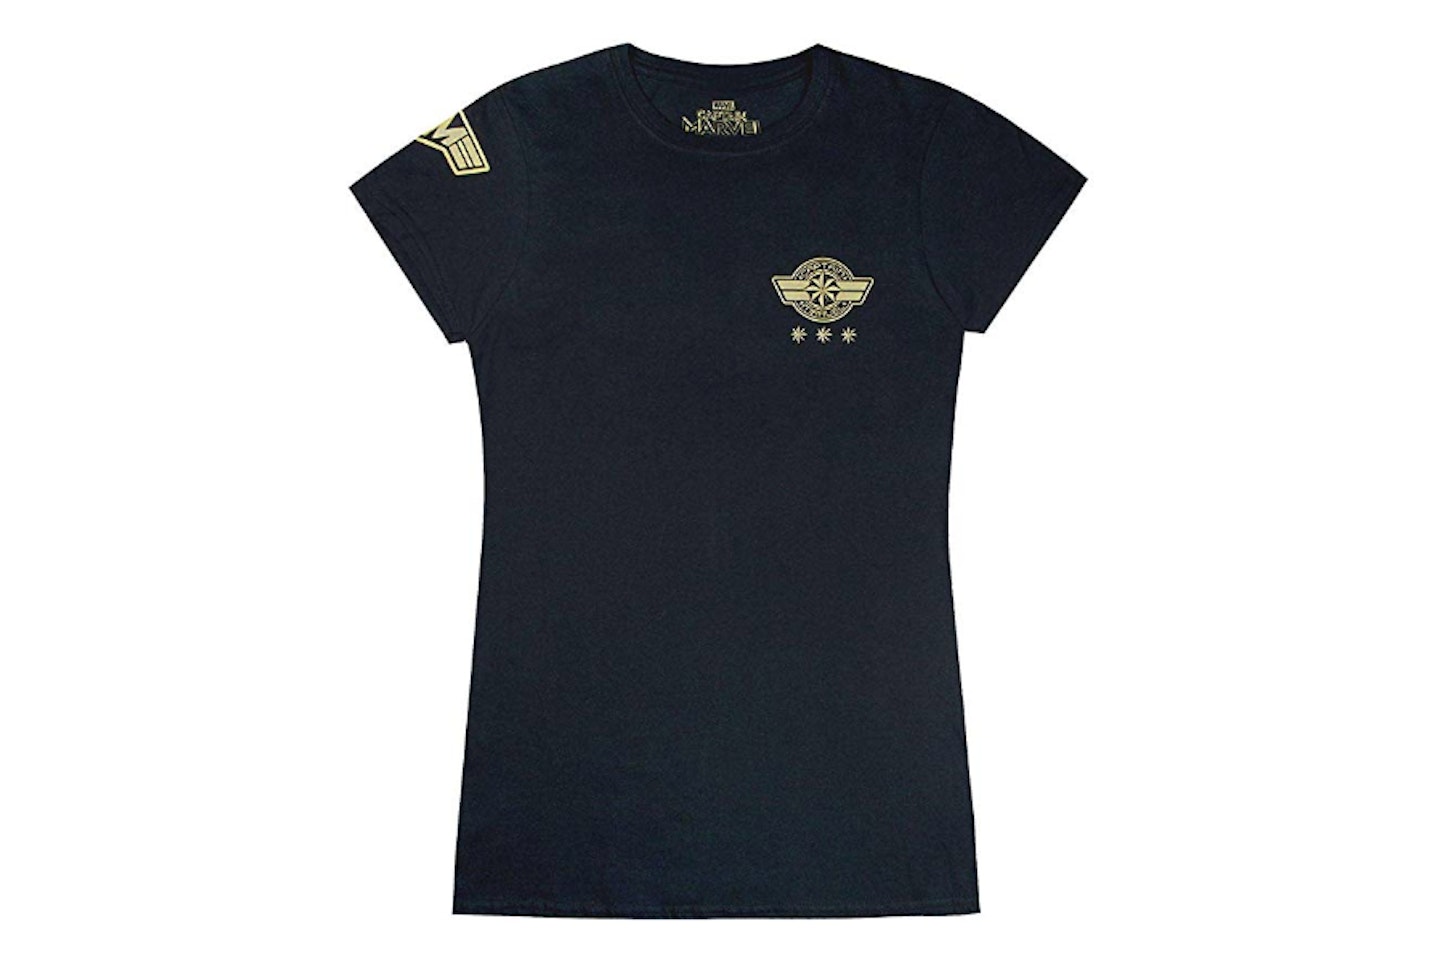 Marvel Captain Shield Emblem Women's Black T-Shirt, £12.99